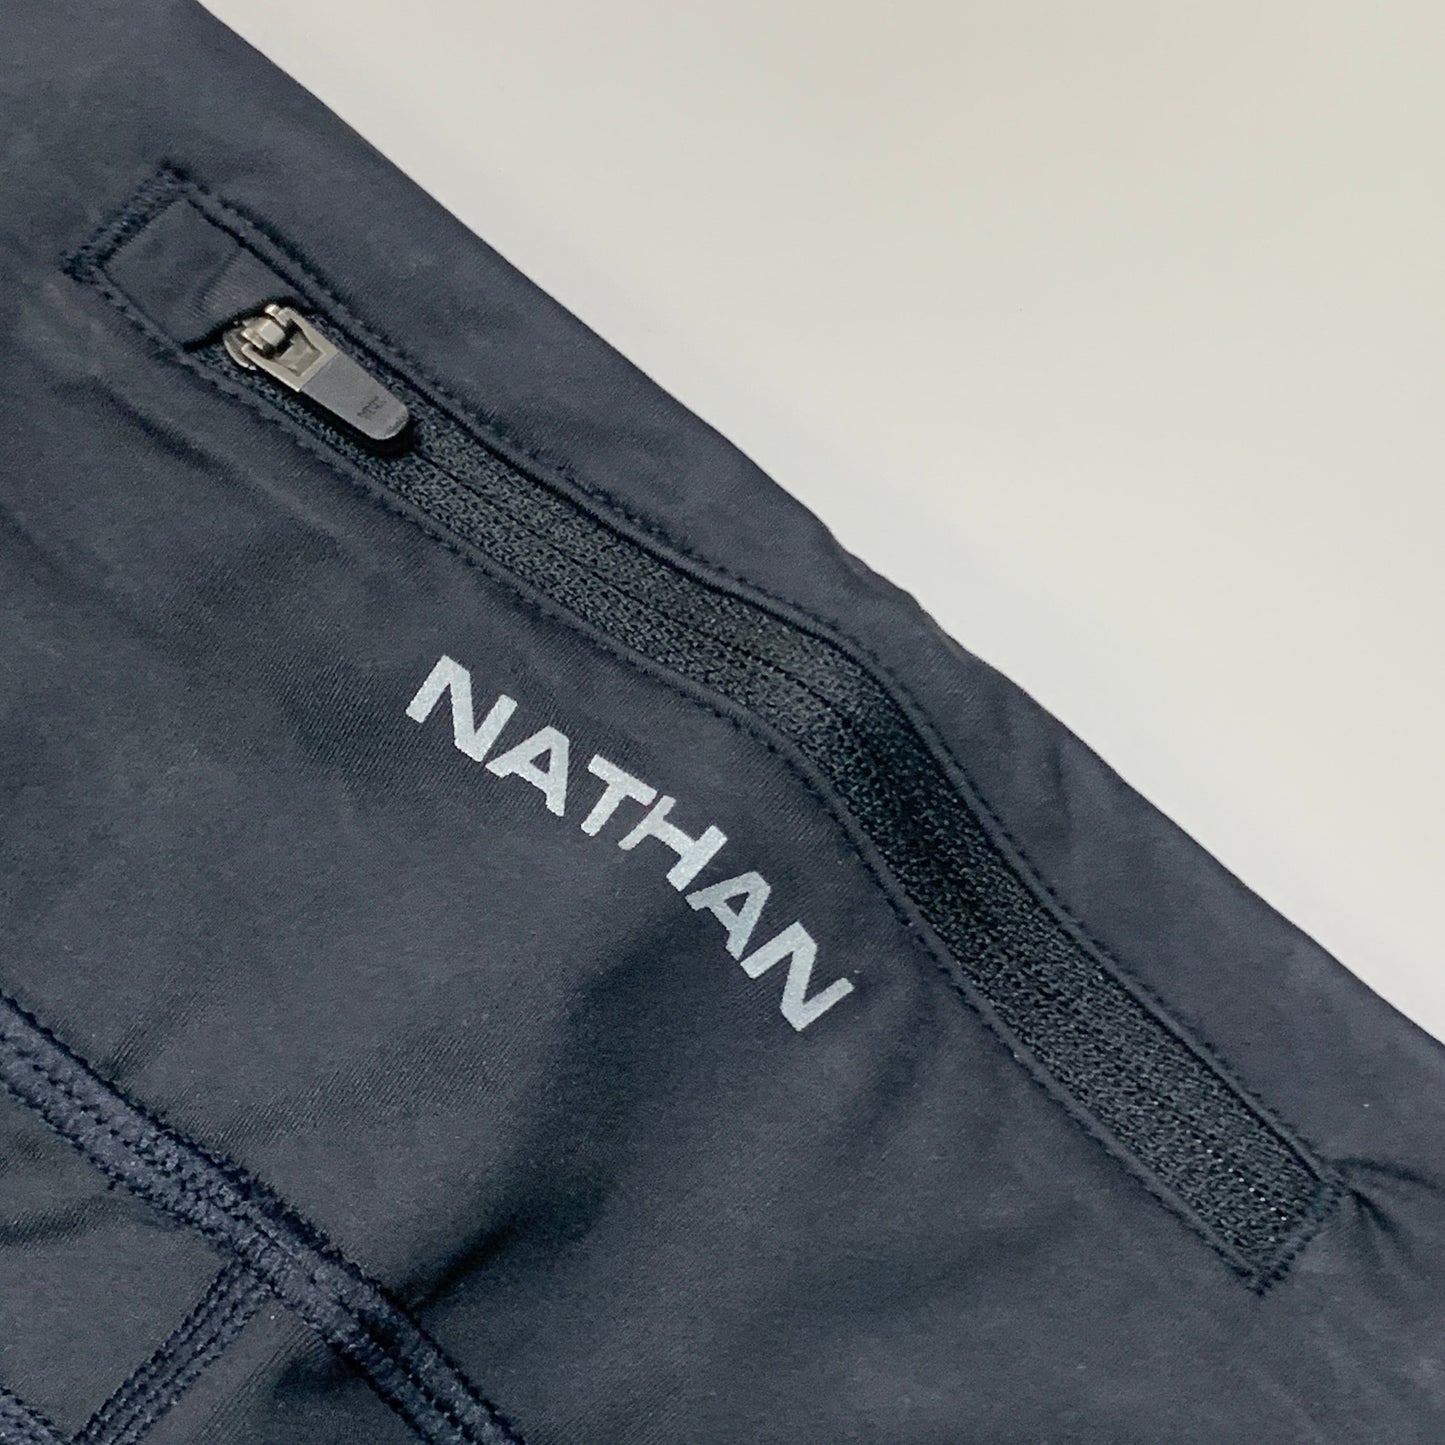 NATHAN Interval 6" Inseam Bike Short Women's Black Size XL NS51520-00001-XL